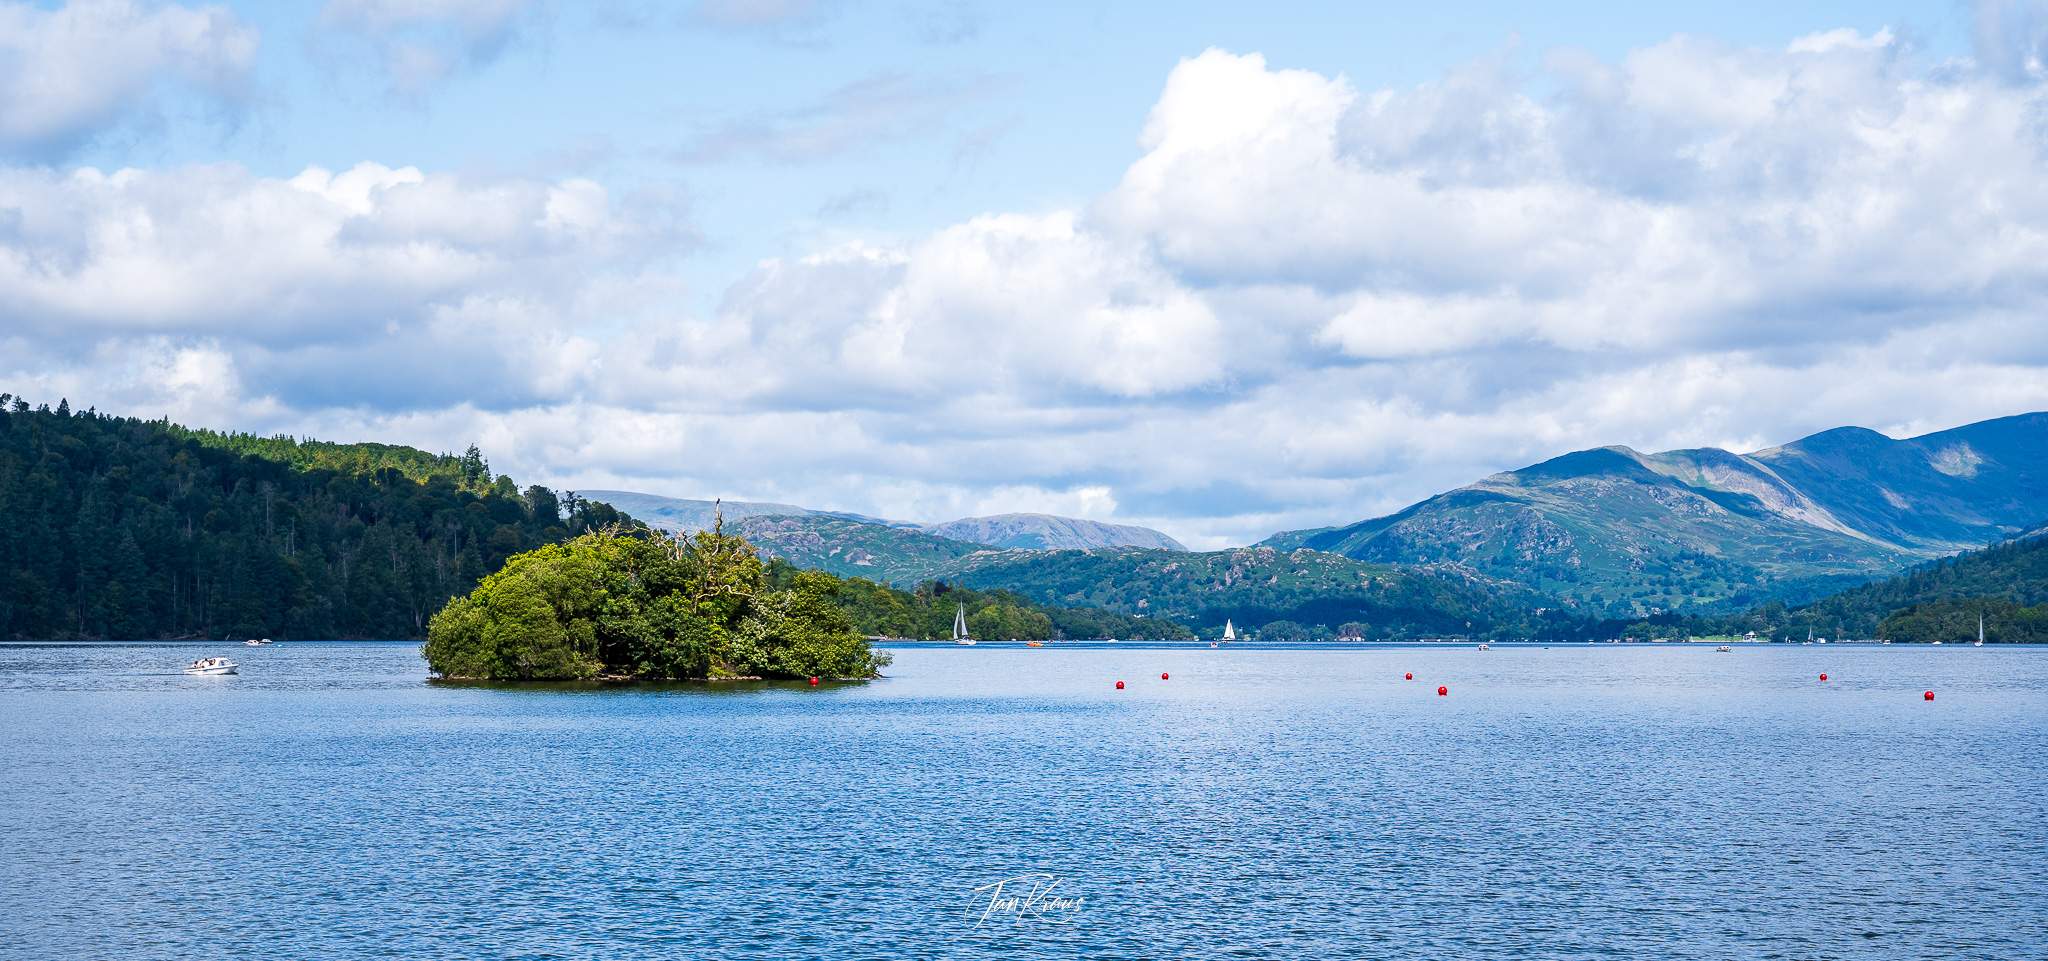 Views from Windermere Lake Cruise, Lake District, England, UK